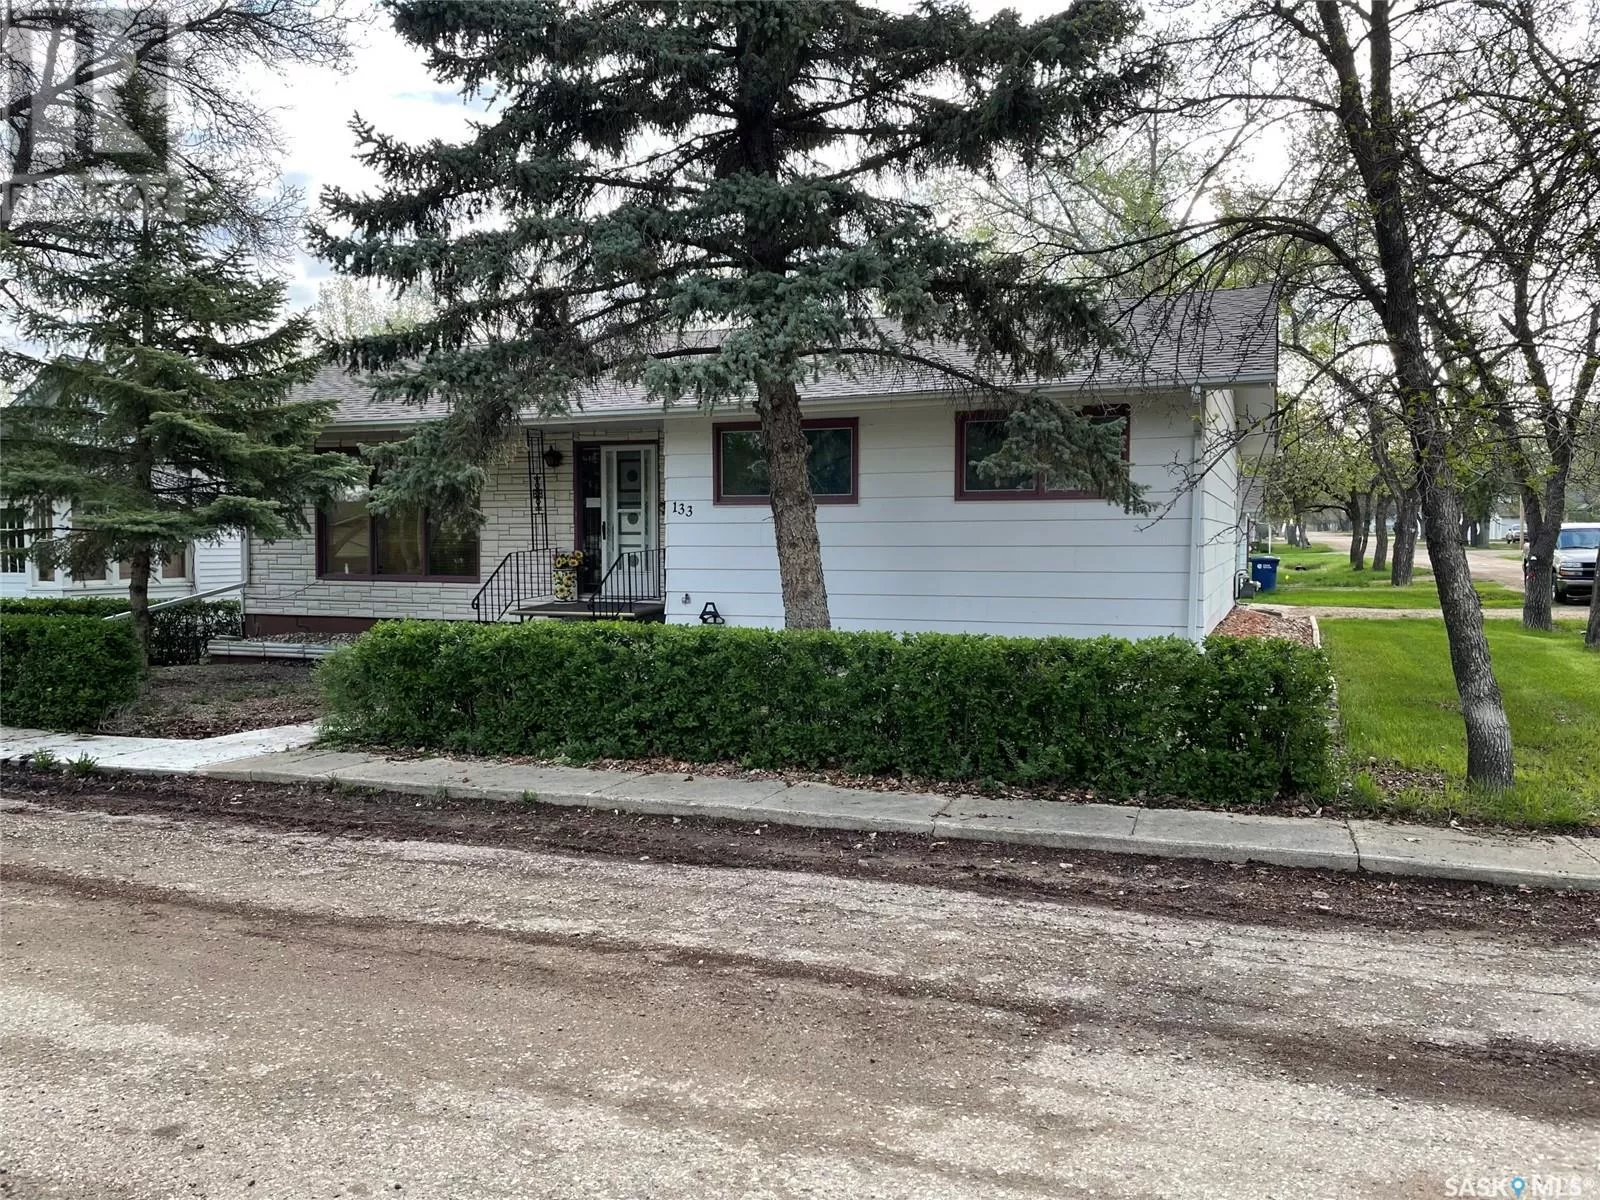 House for rent: 133 2nd Street W, Lafleche, Saskatchewan S0H 2K0